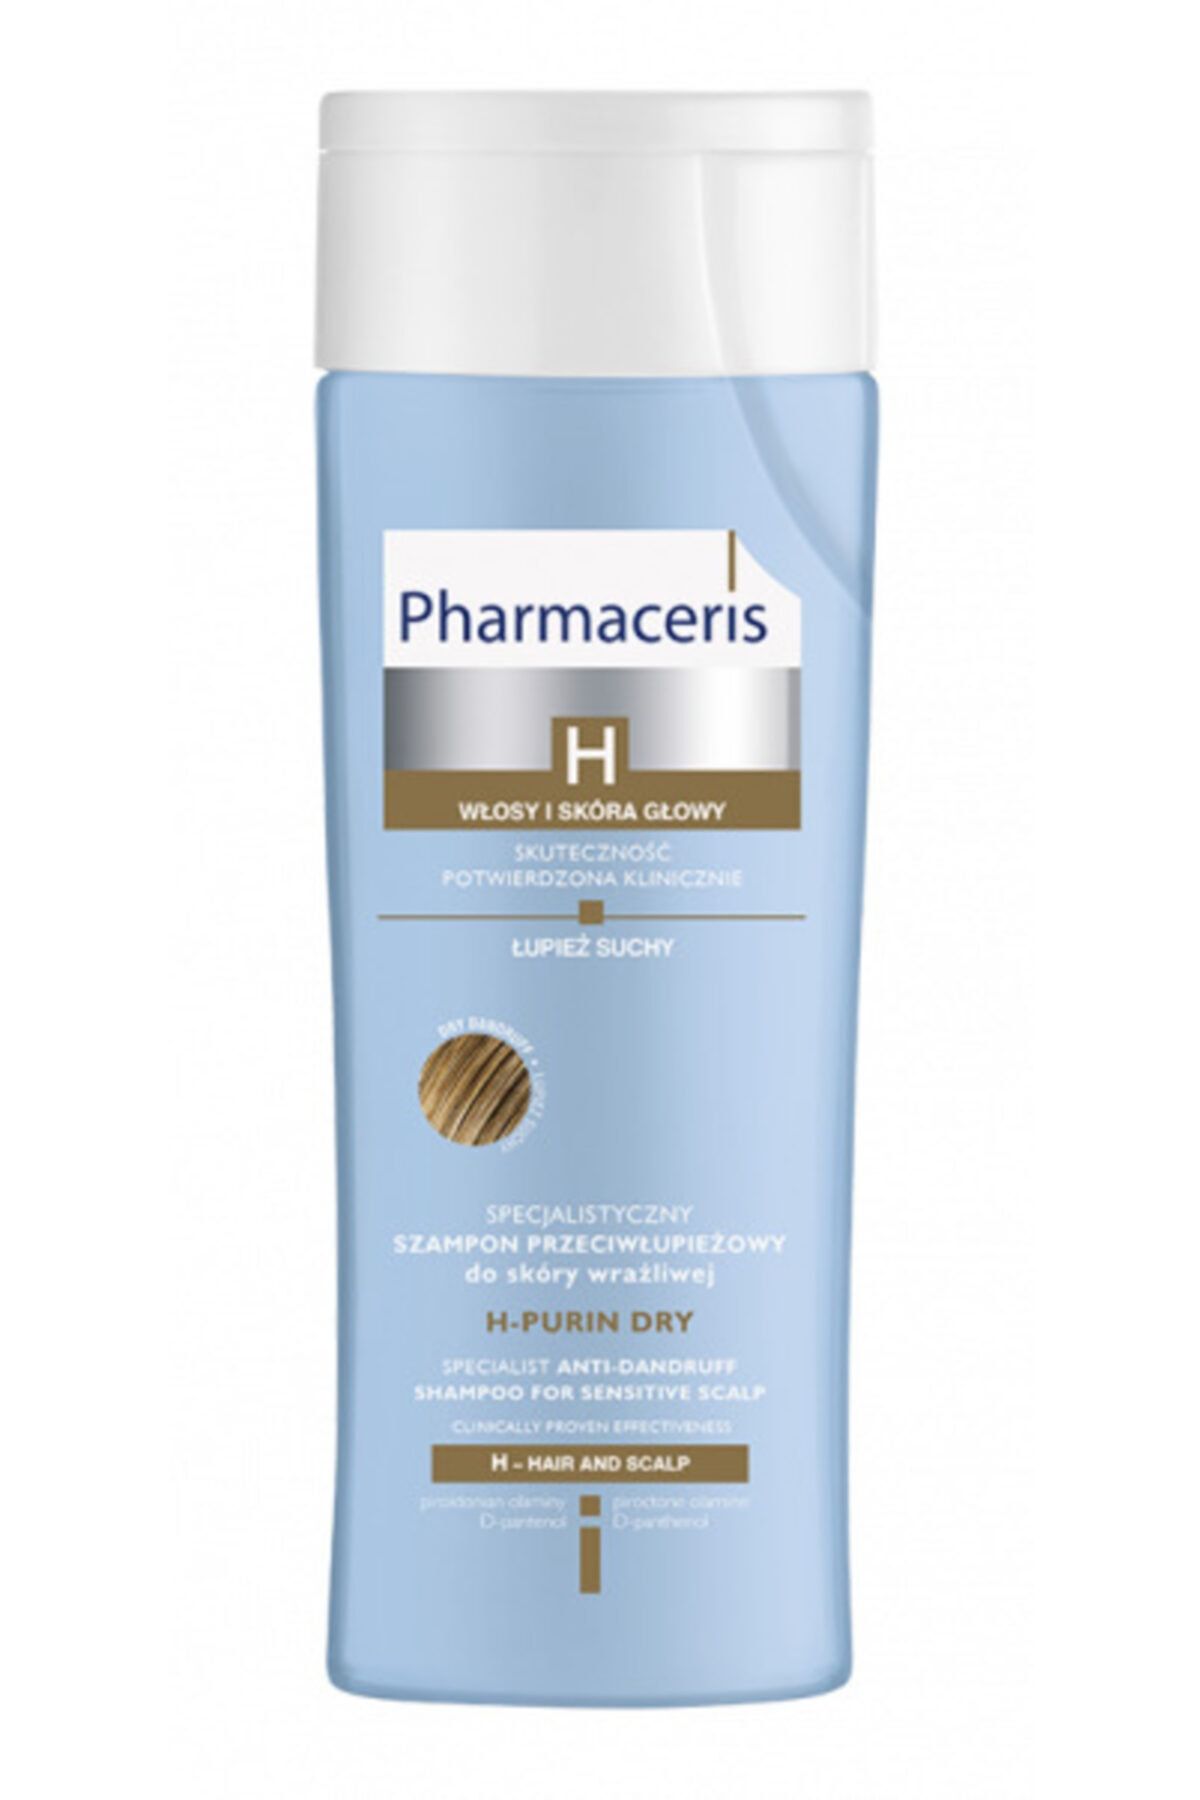 Pharmaceris H- Purin Dry Şampuan 250 ml